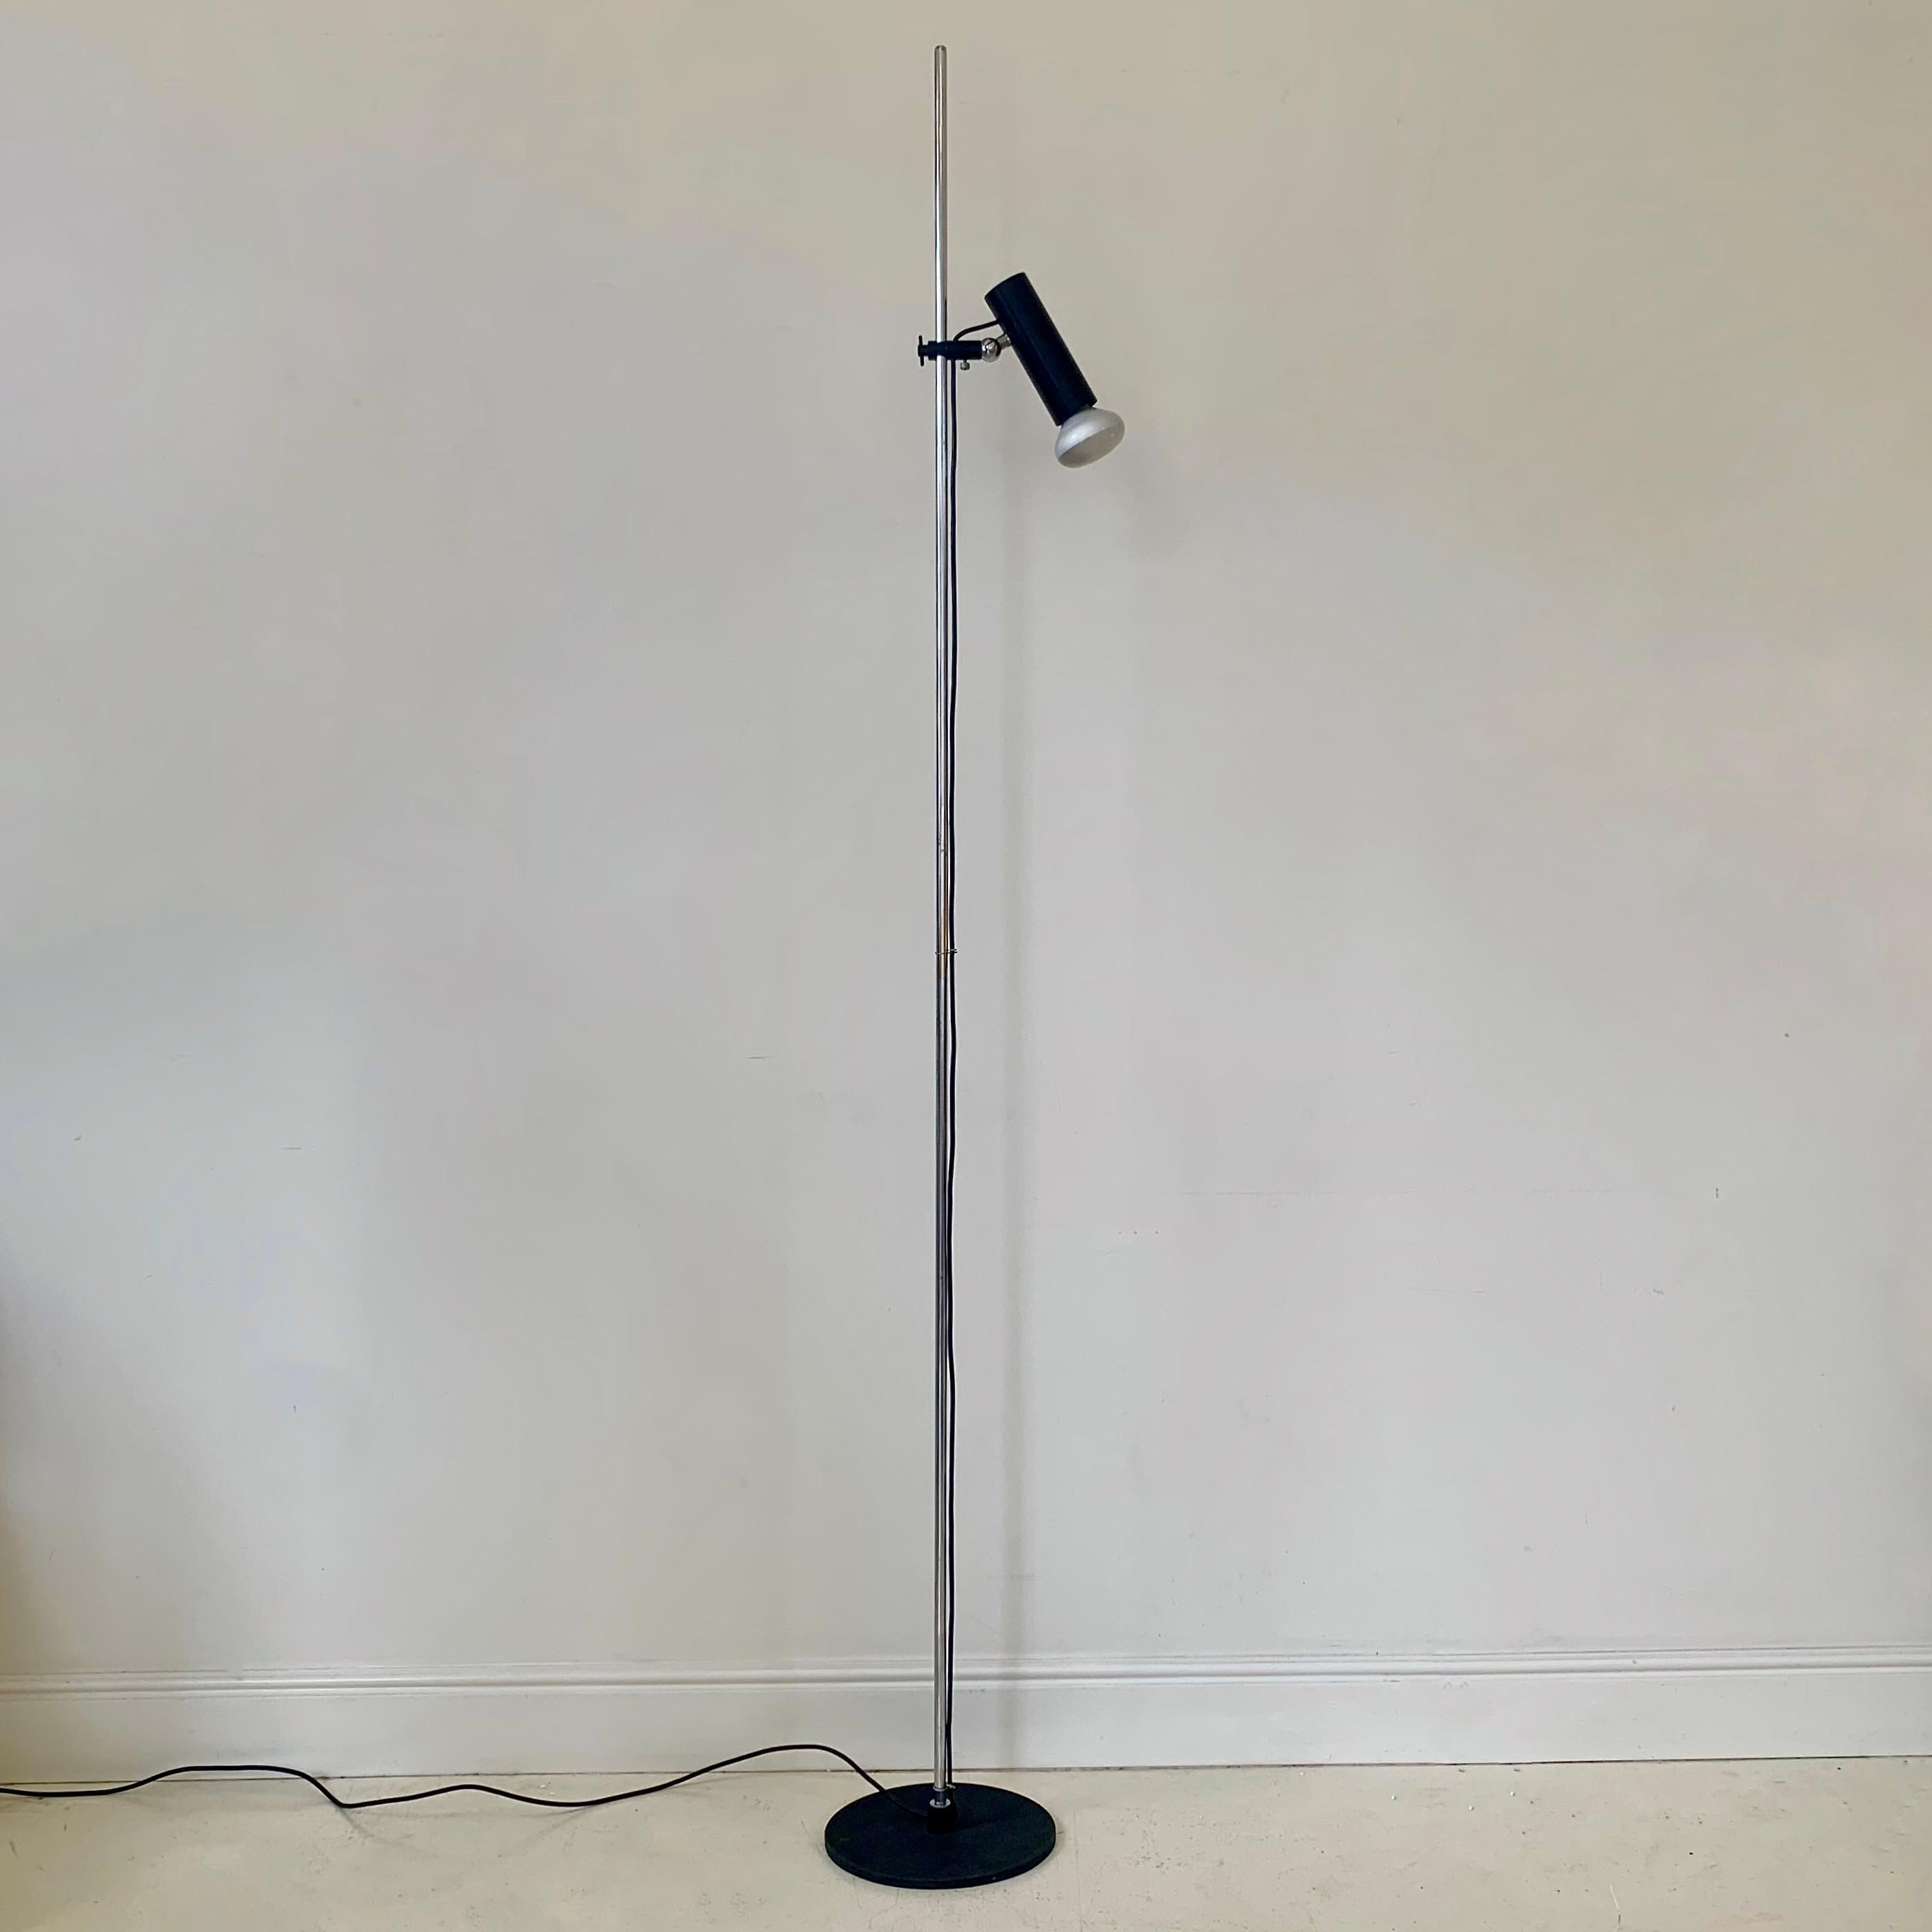 Gino Sarfatti adjustable floor lamp, 1055 /SP model for Arteluce, circa 1955, Italy.
Black lacquered aluminum, spotlight bulb, chrome-plated stee bar, cast-iron black crackle base.
Dimensions: 190 cm H, diameter of the base: 25 cm .
Good original